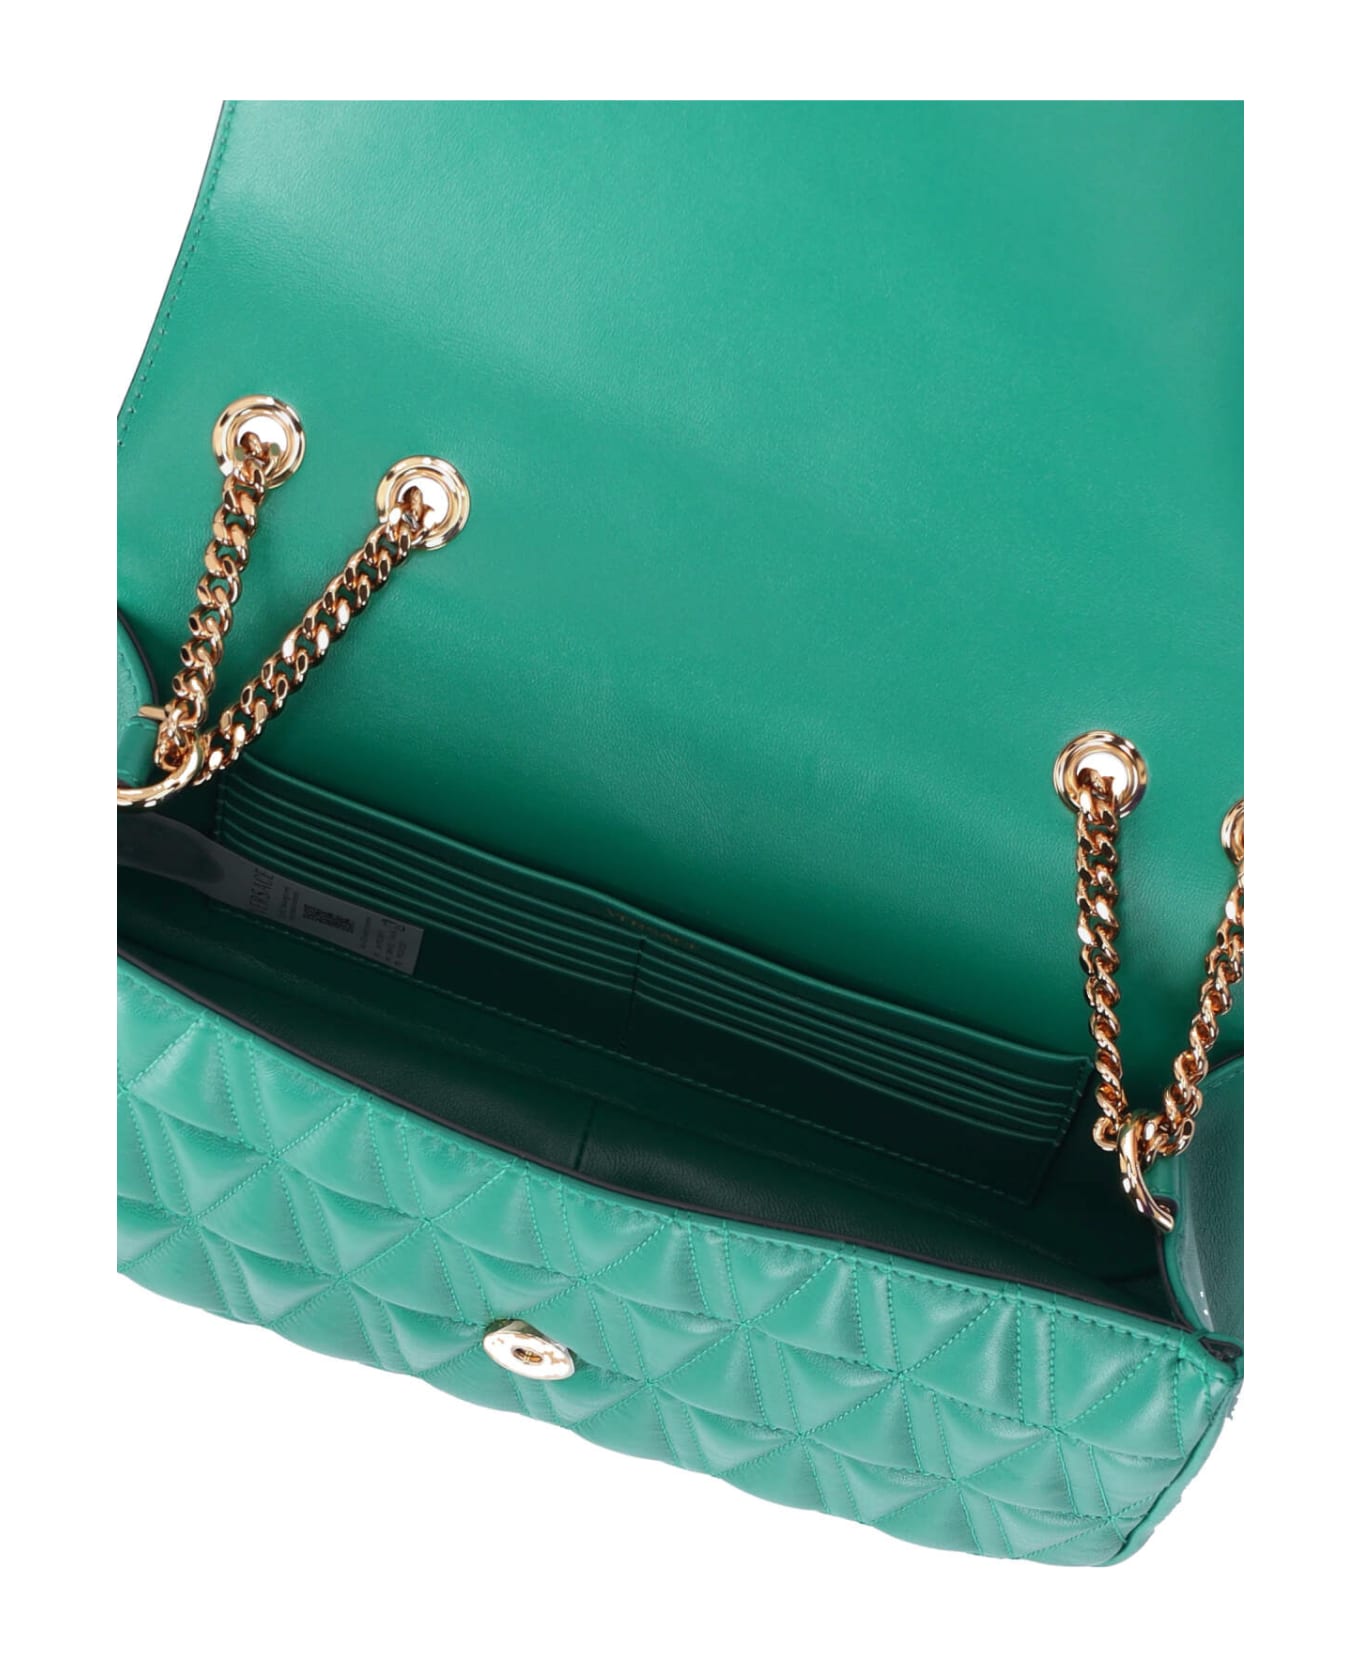 Versace Shoulder Bag - Green ショルダーバッグ